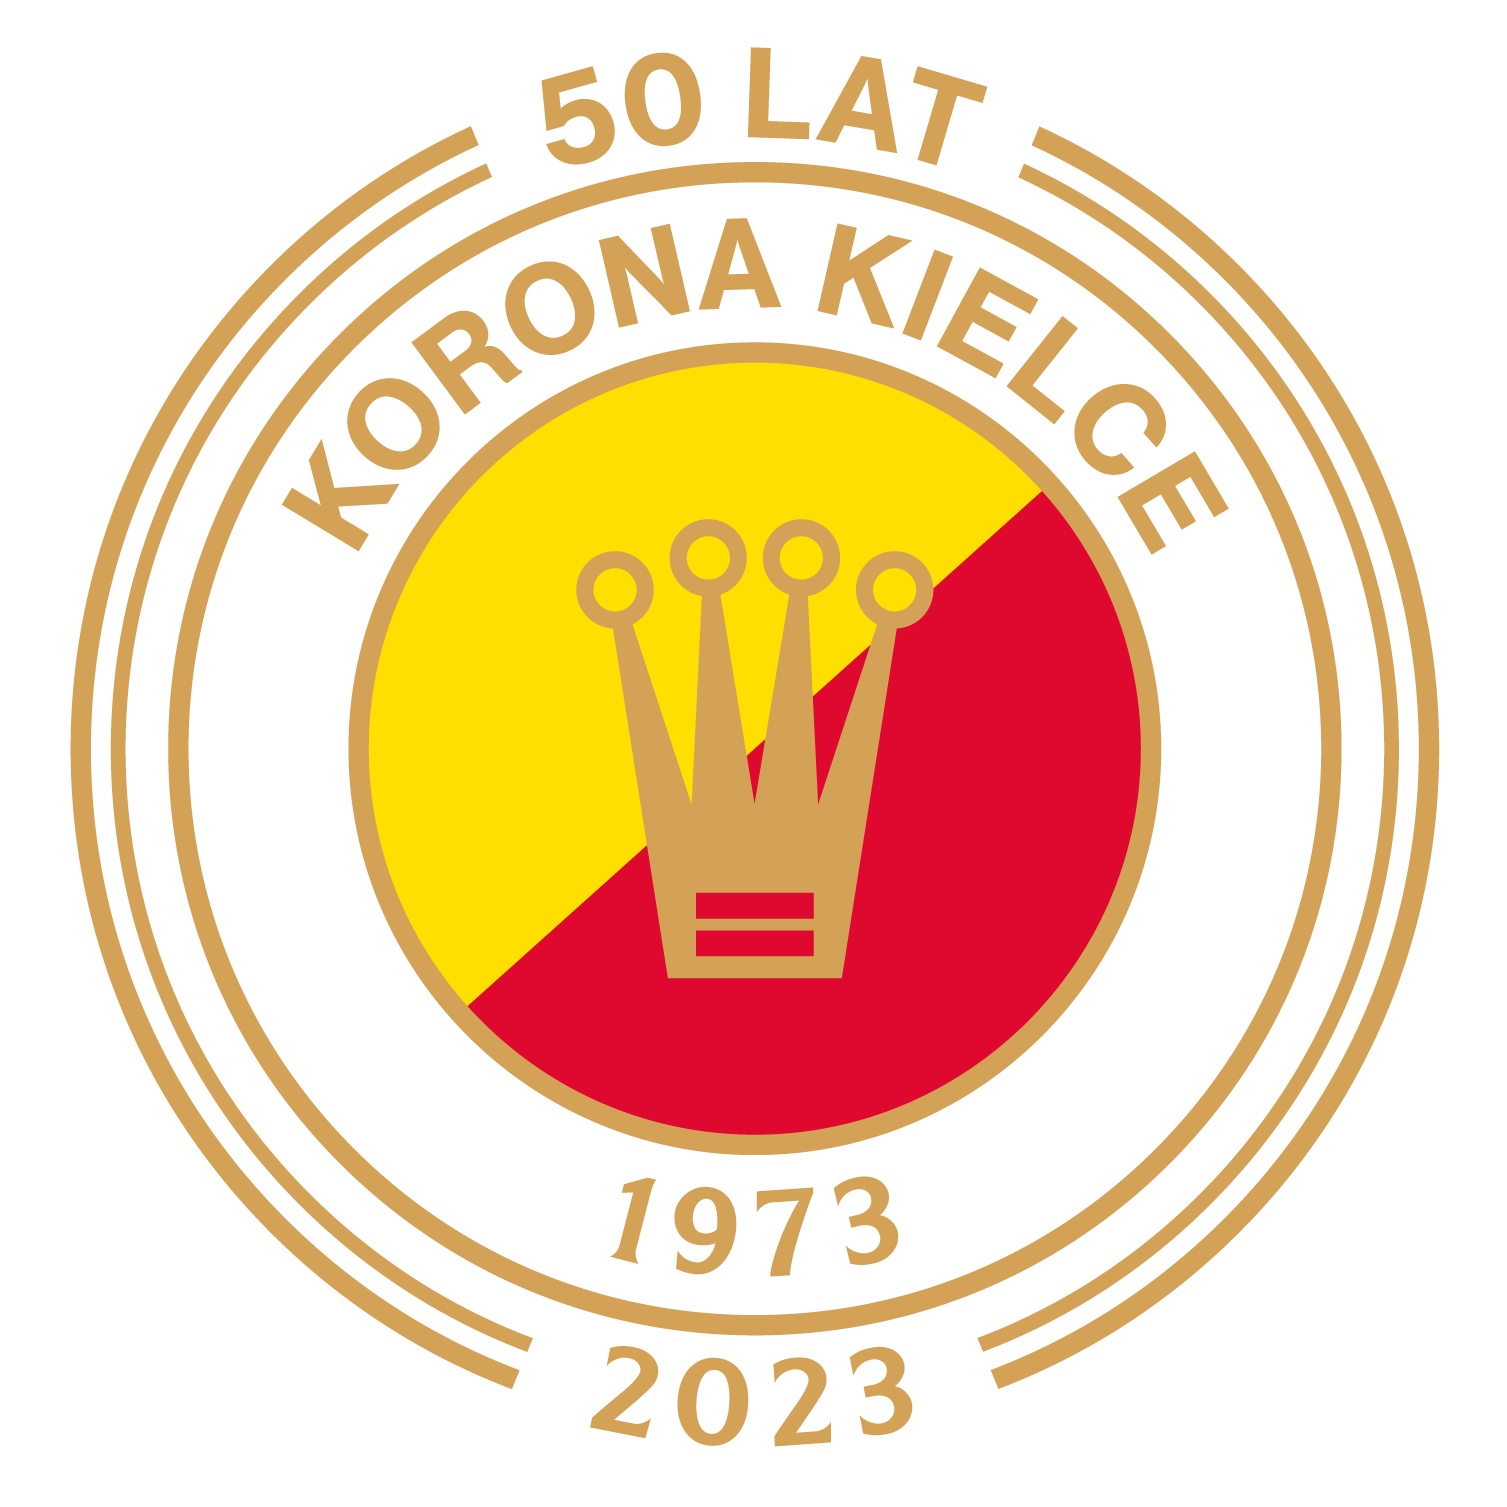 Korona Kielce Sub 17